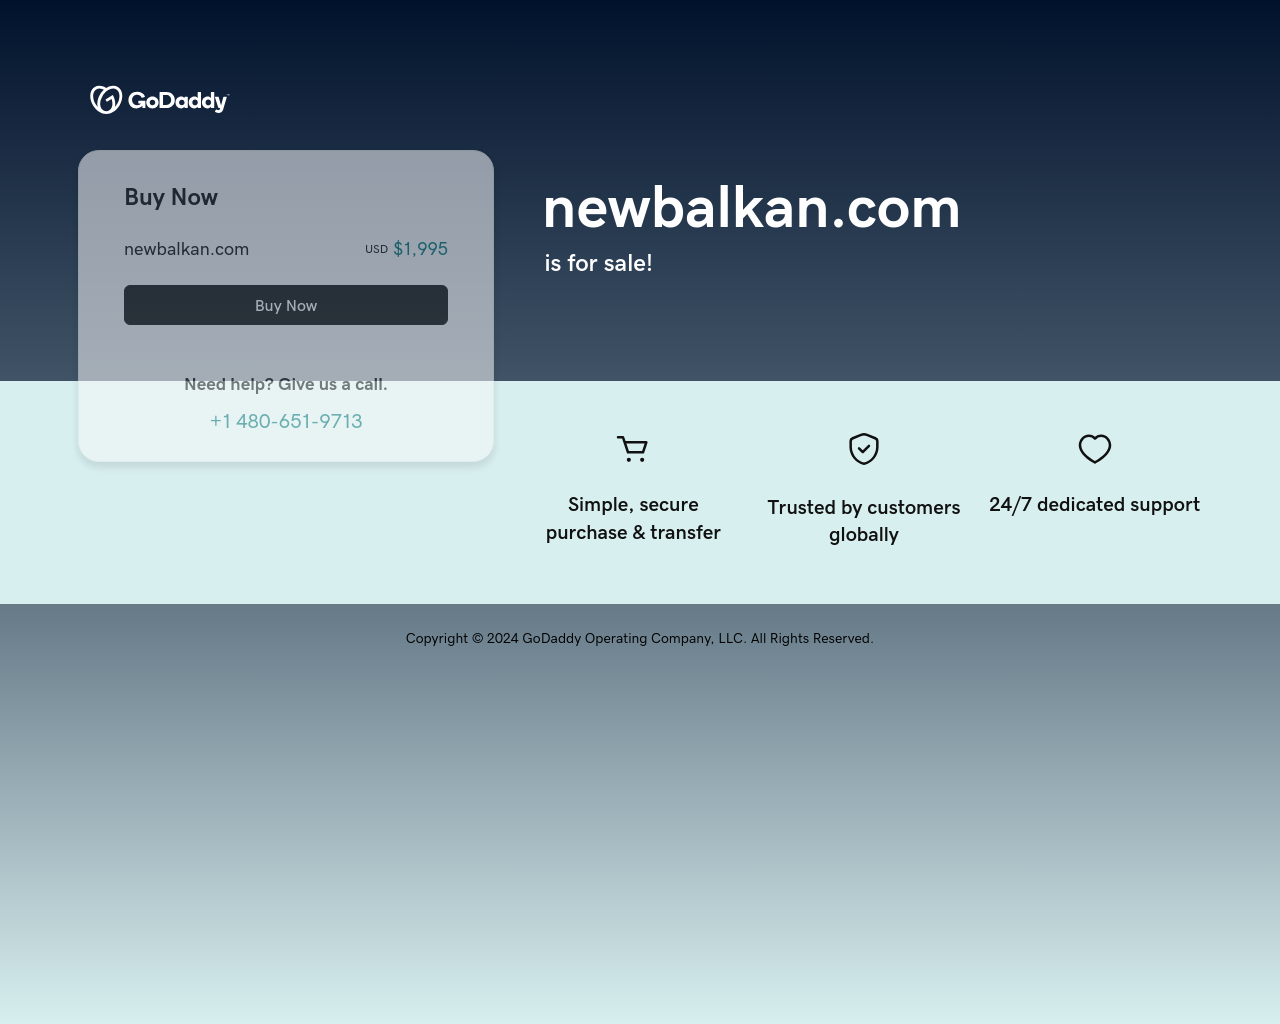 newbalkan.com